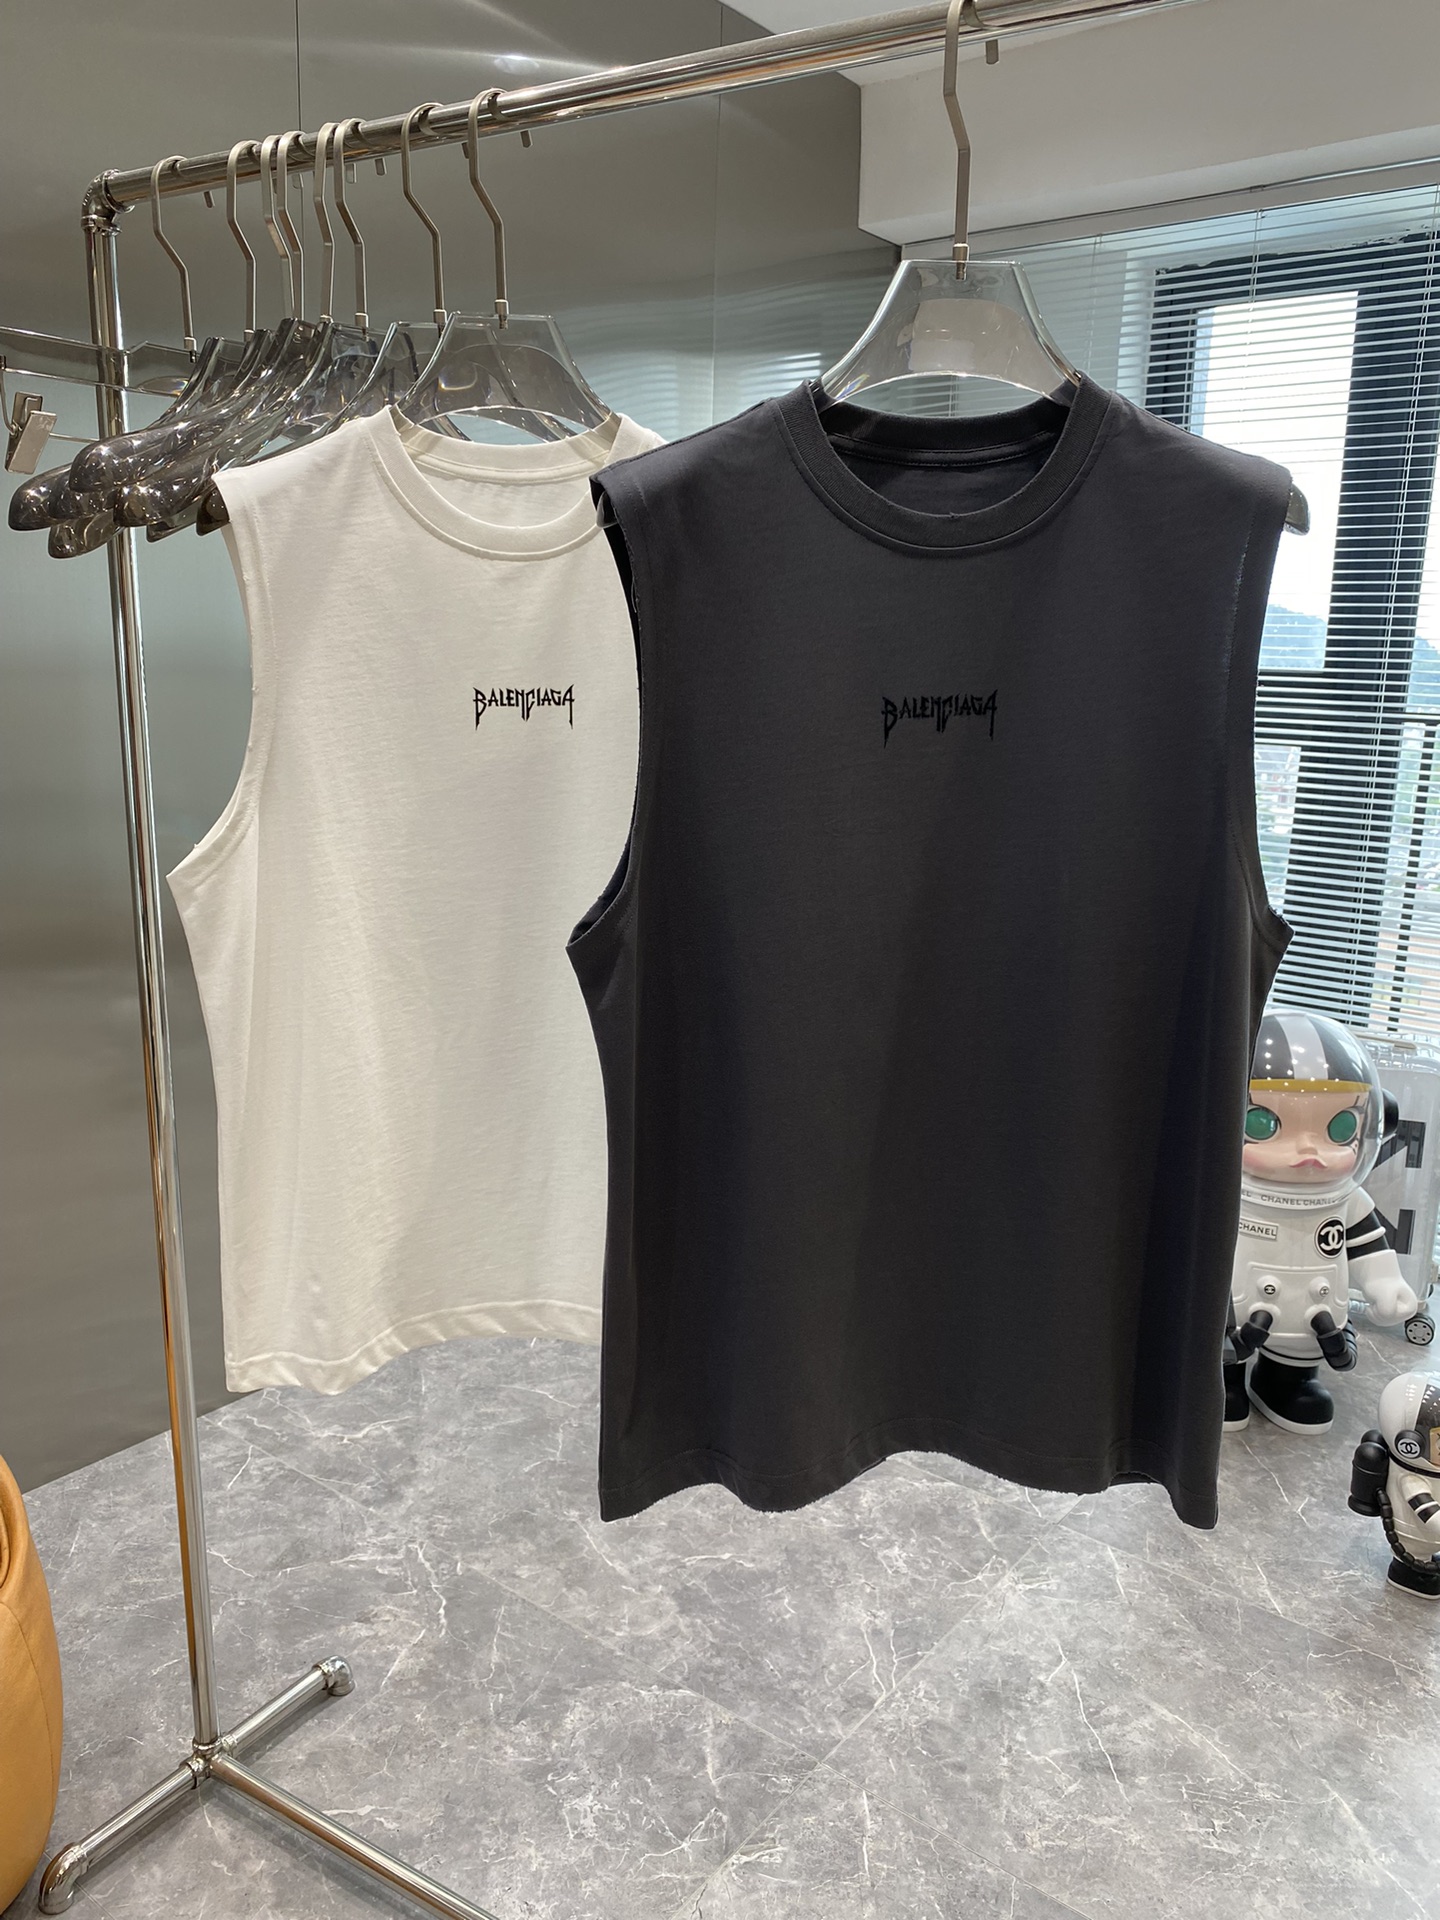 Balenciaga Clothing Tank Tops&Camis Outlet 1:1 Replica
 Embroidery Combed Cotton Summer Collection